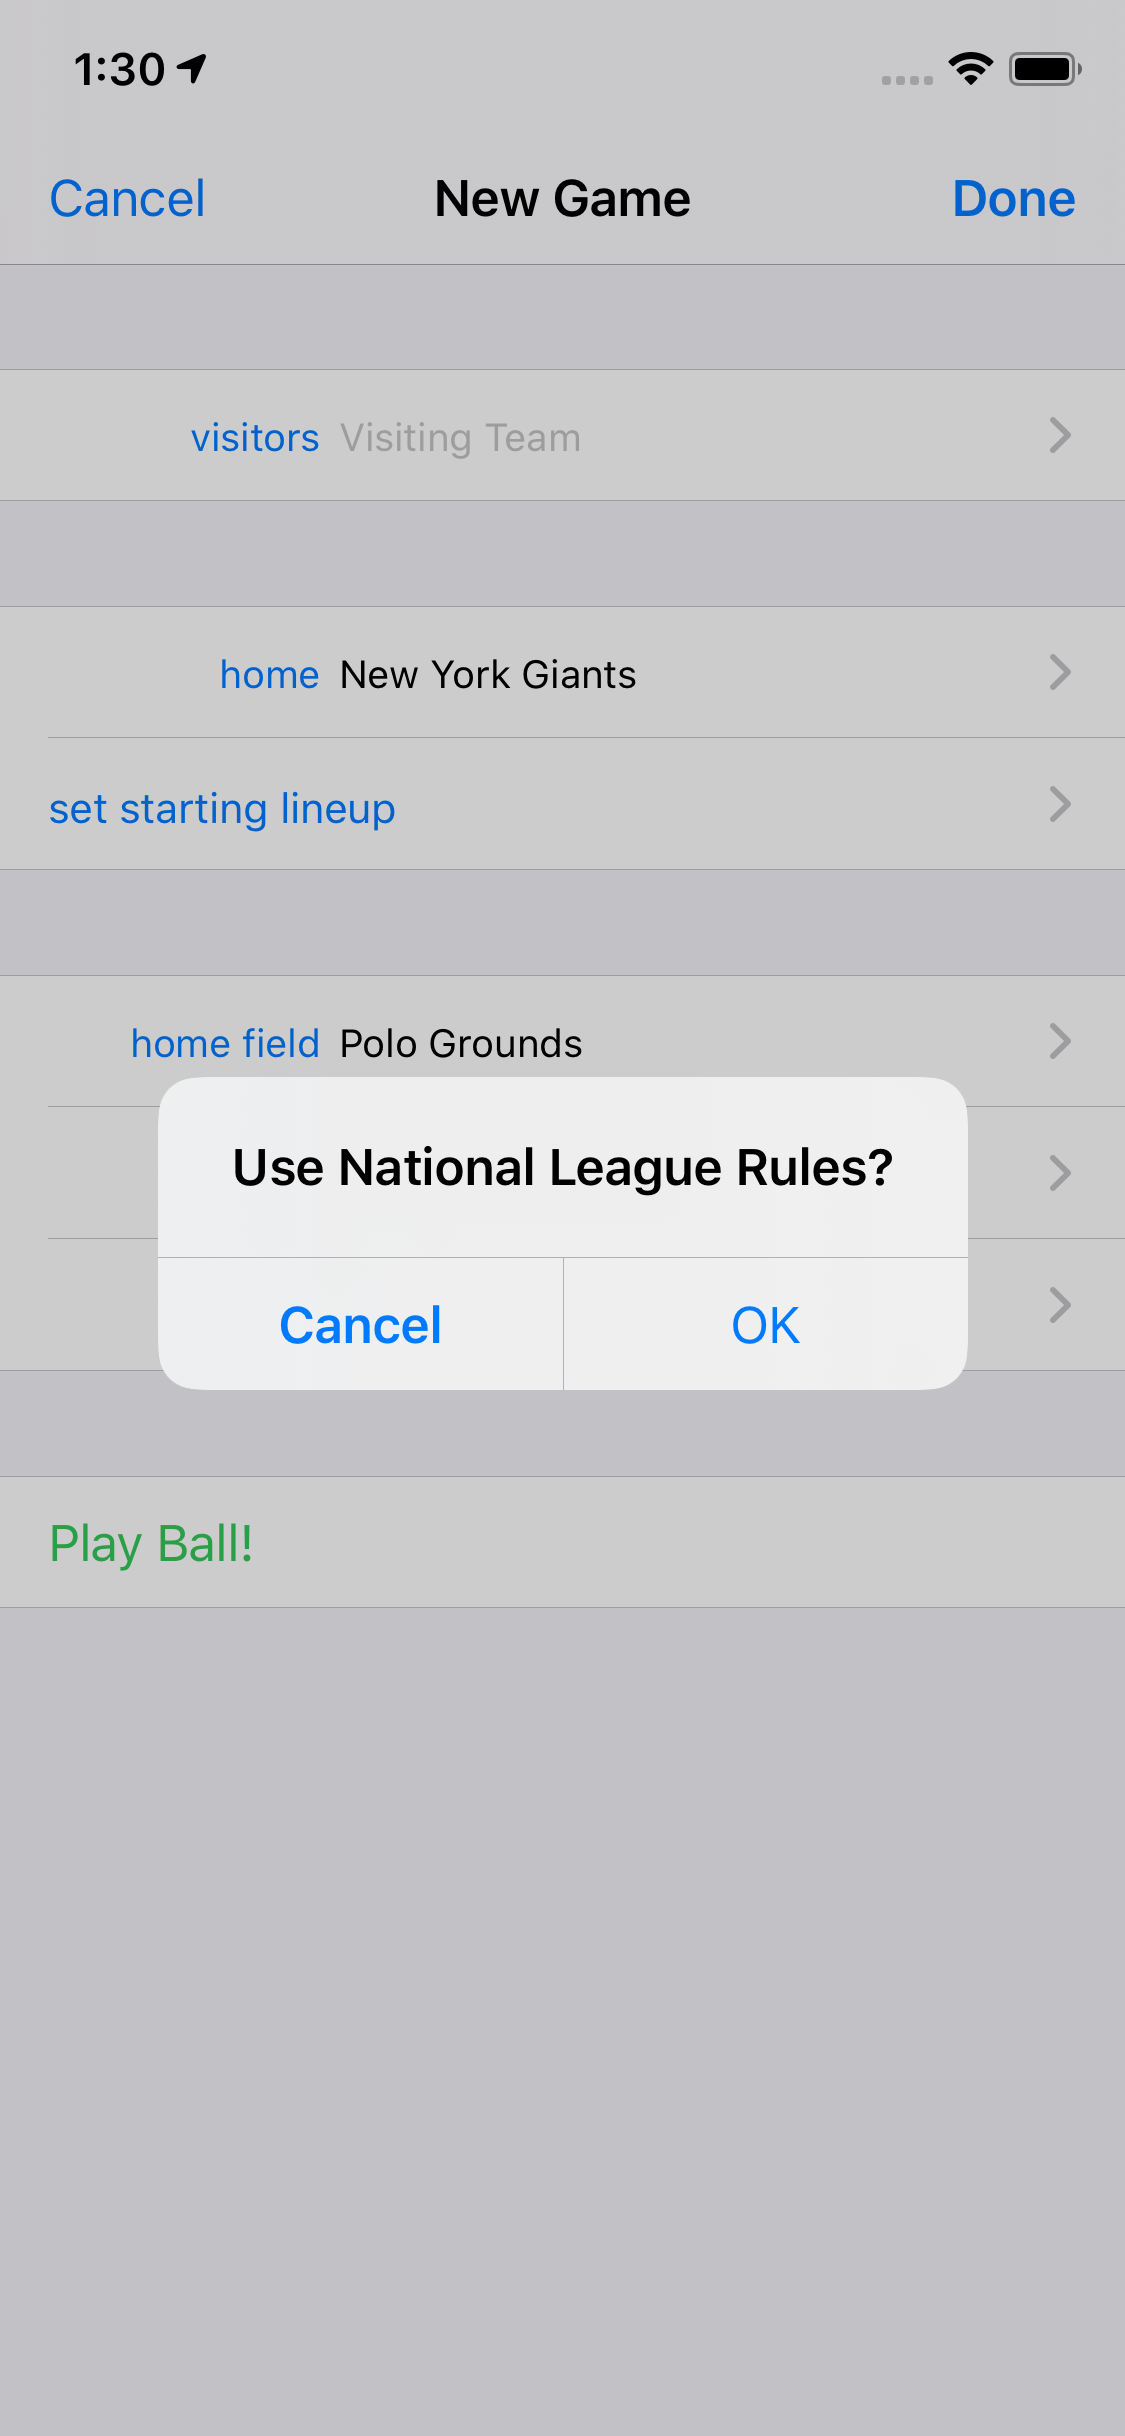 Use National League Rules?